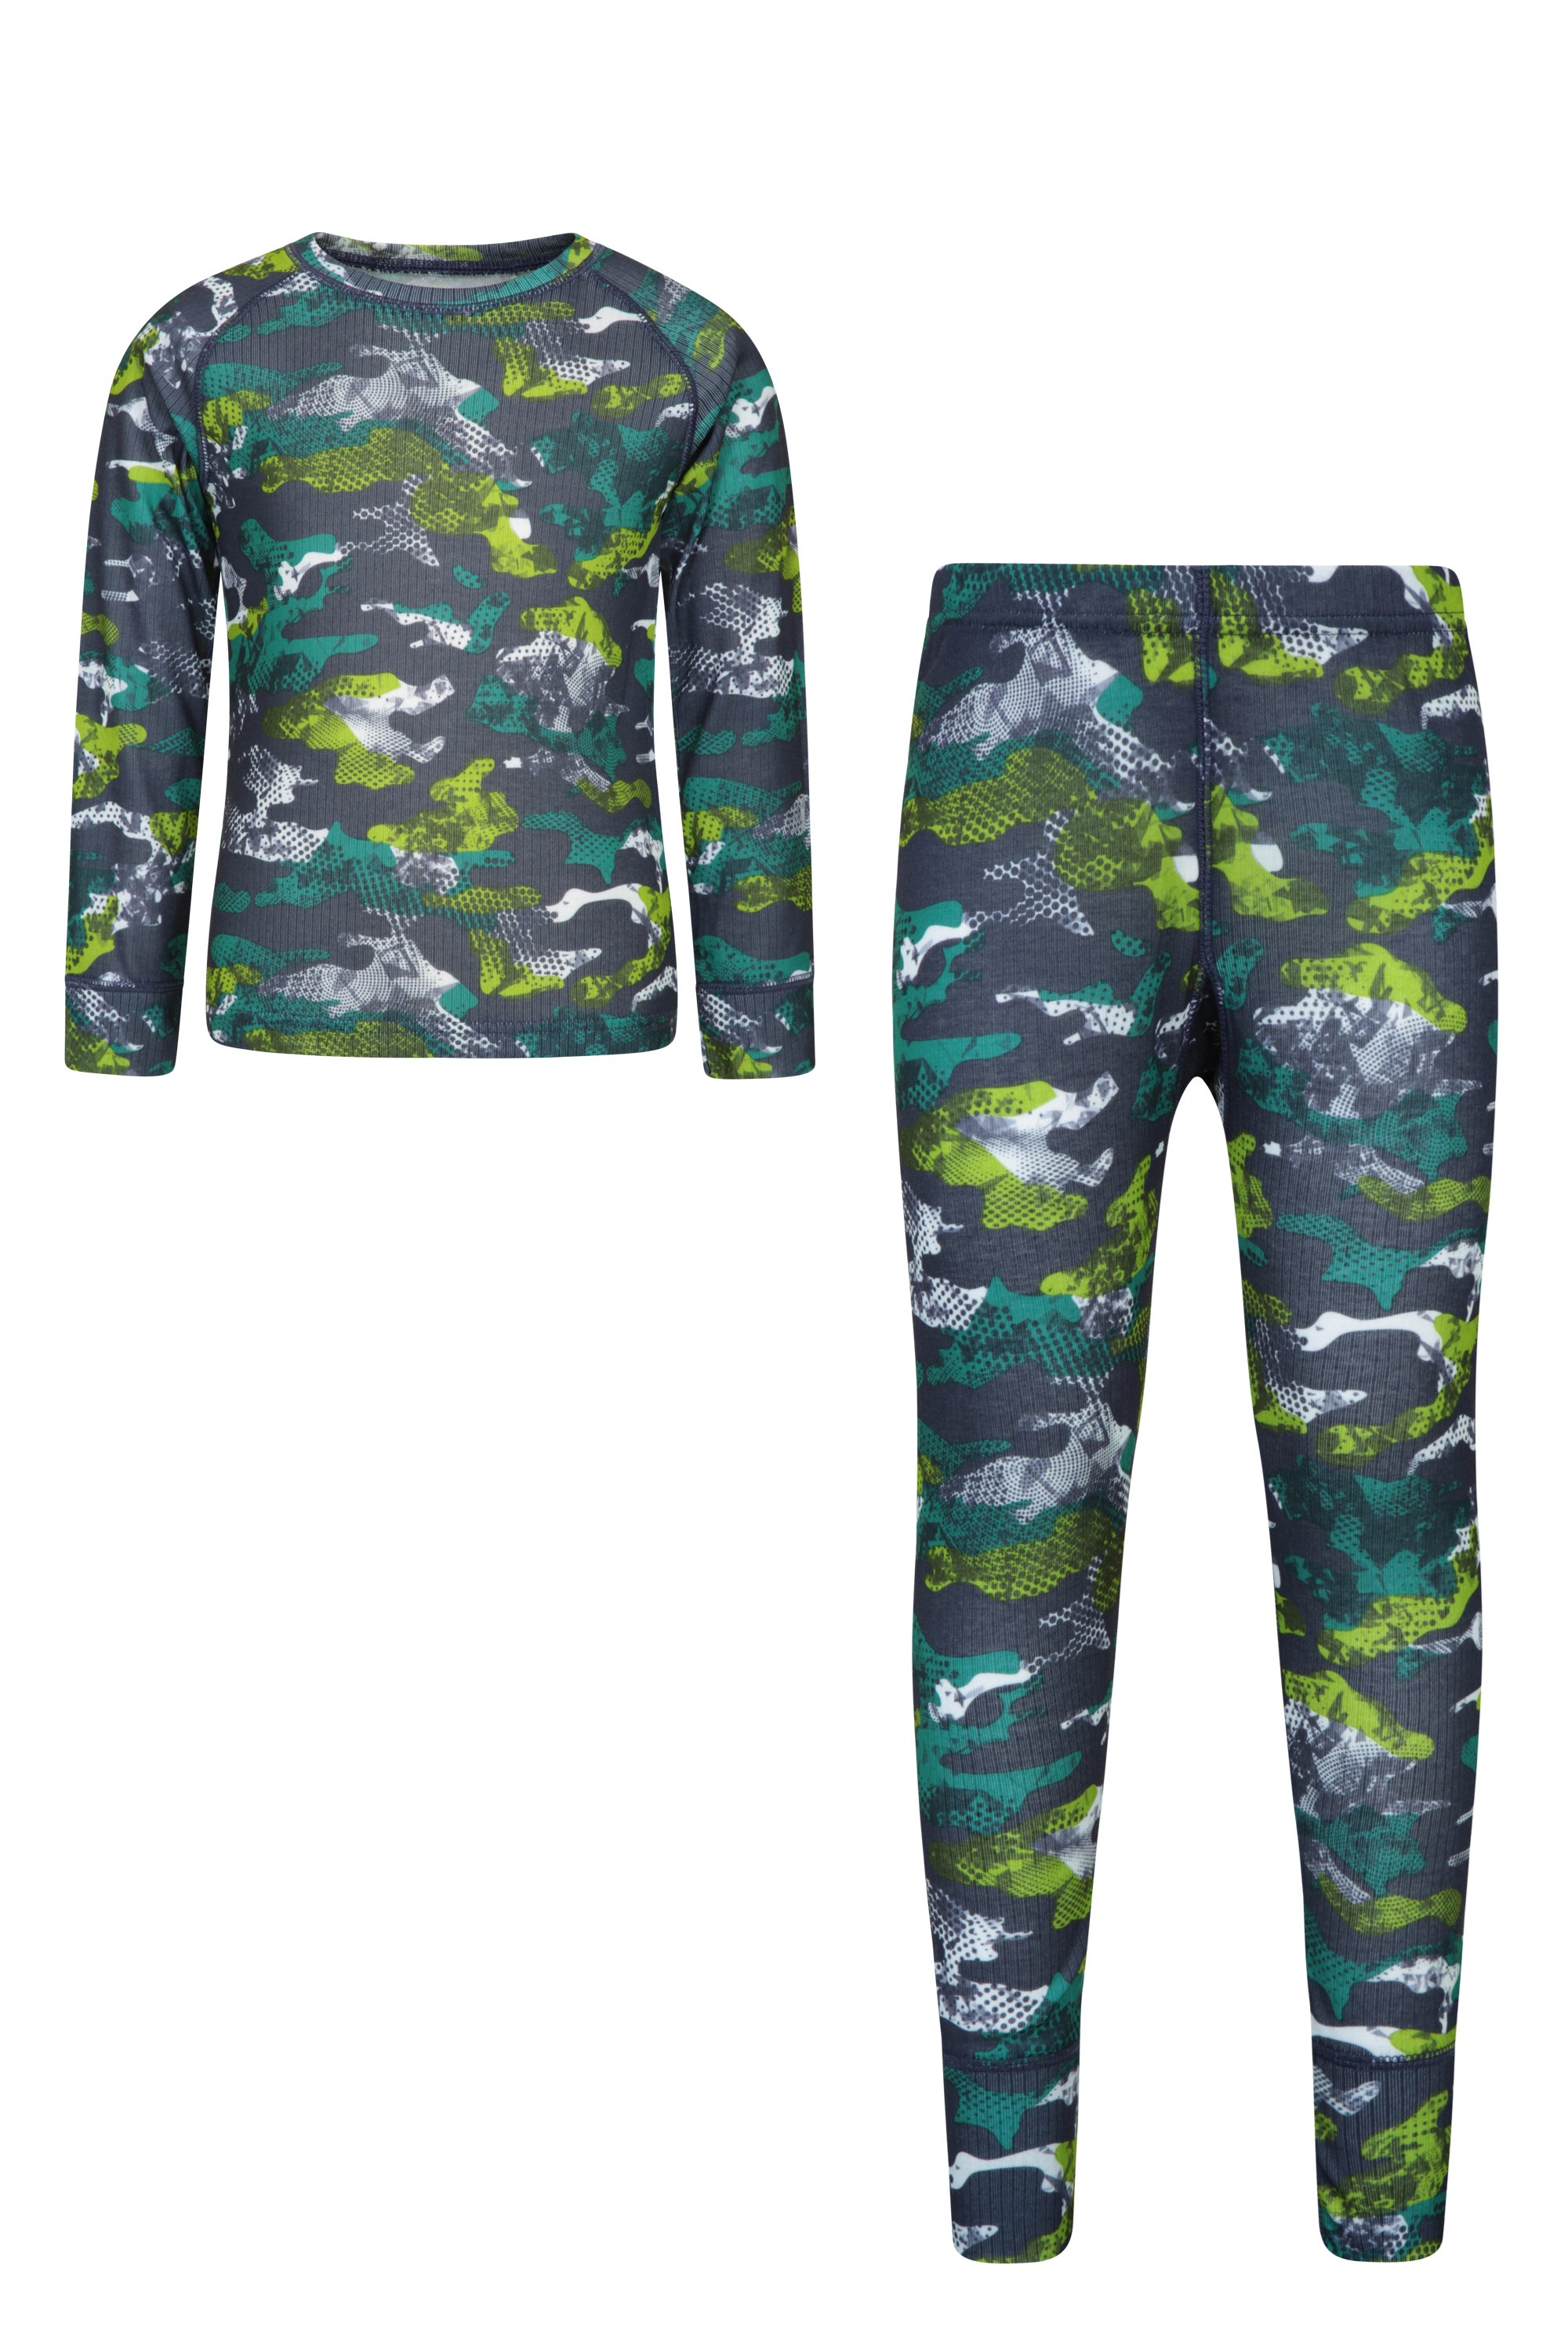 Mountain Warehouse Talus Printed Kids Top & Pant Boys Base Layer Casual T-Shirt 